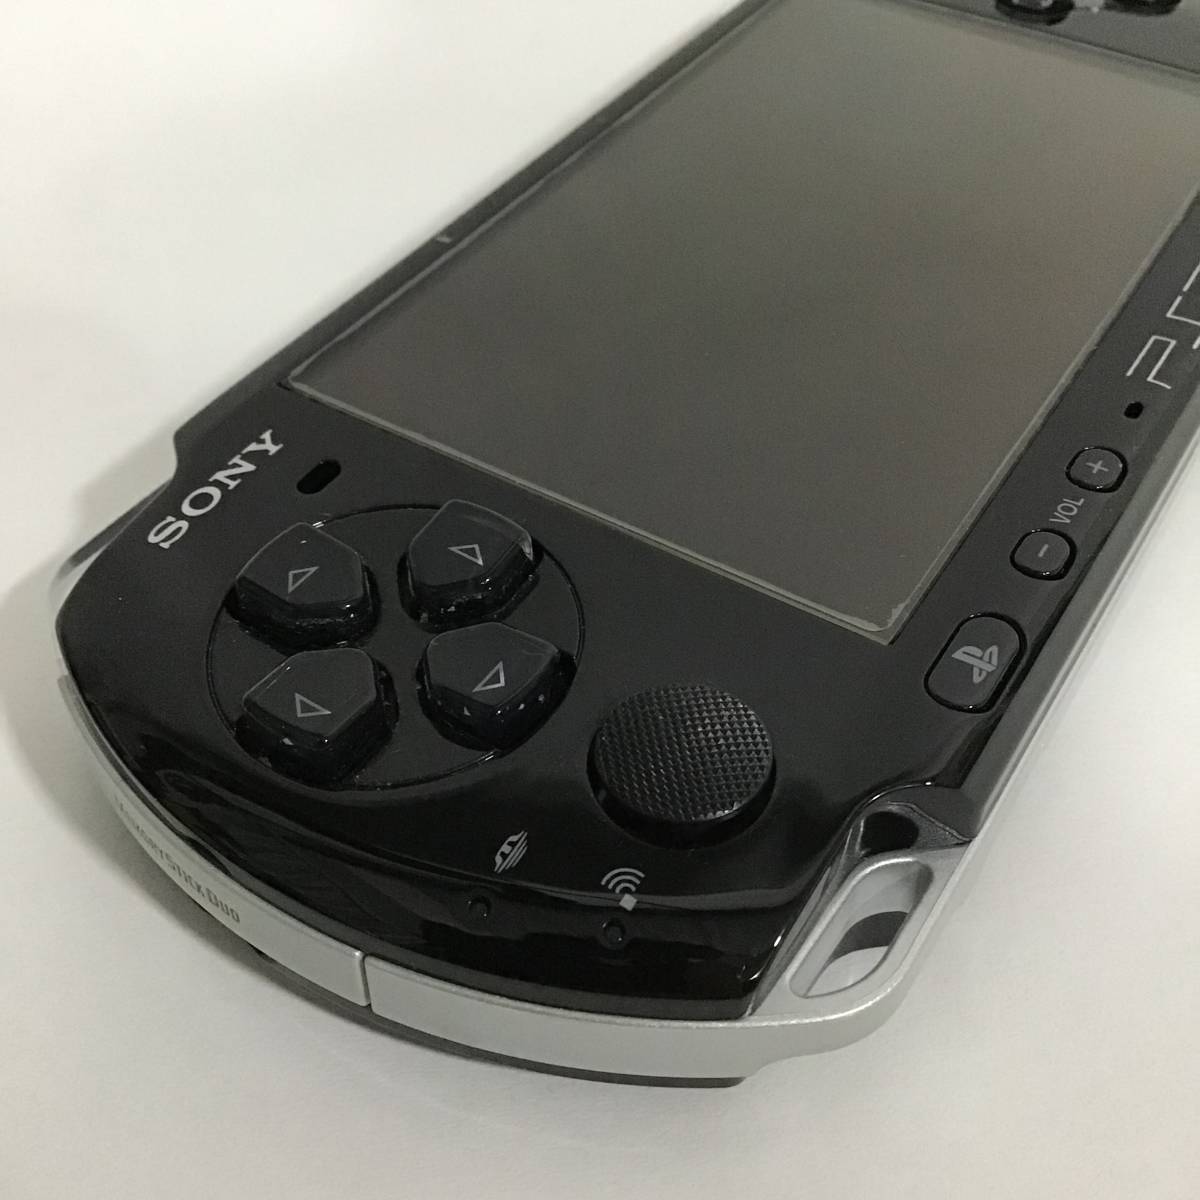 PSP-3000 ピアノブラック PSP本体 ソフト2本付き まとめ売り 中古 匿名